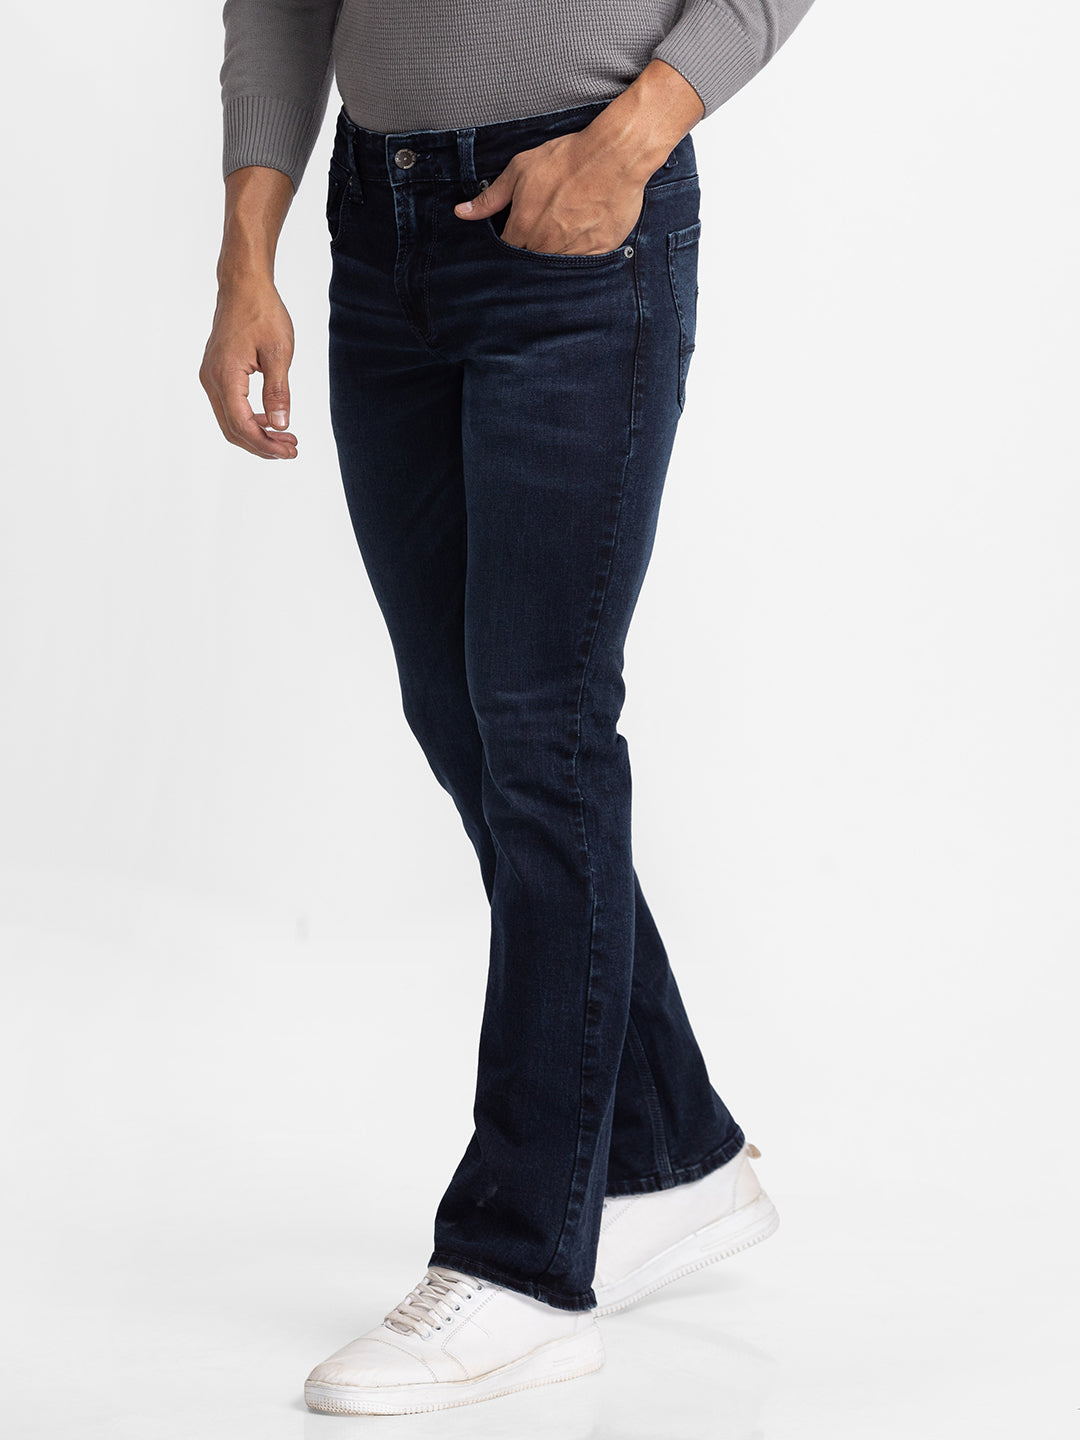 Spykar Blue Indigo Cotton Comfort Fit Regular Length Jeans For Men (Rafter)